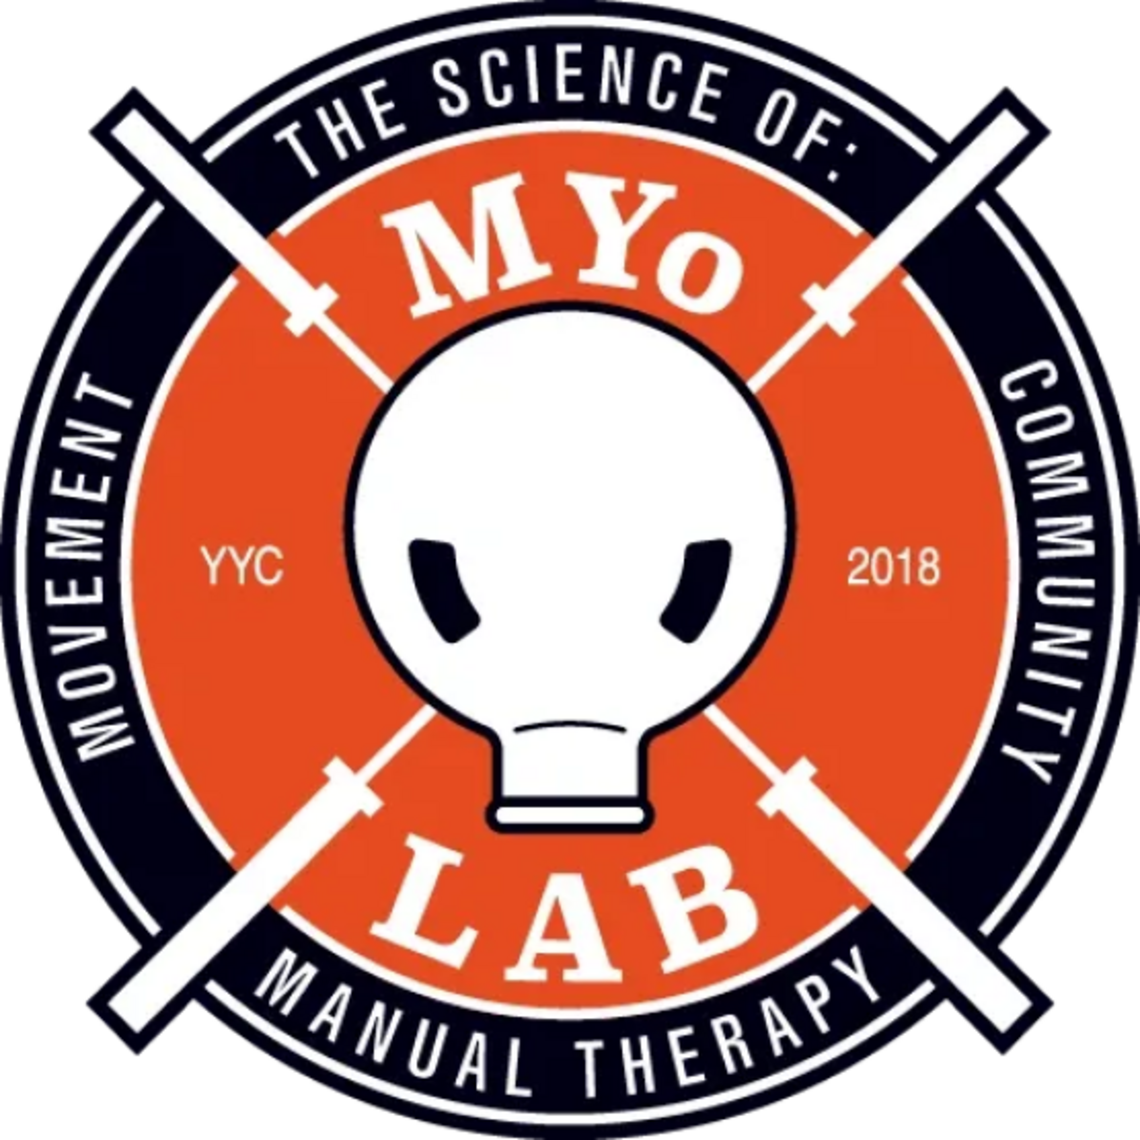 MYo Lab